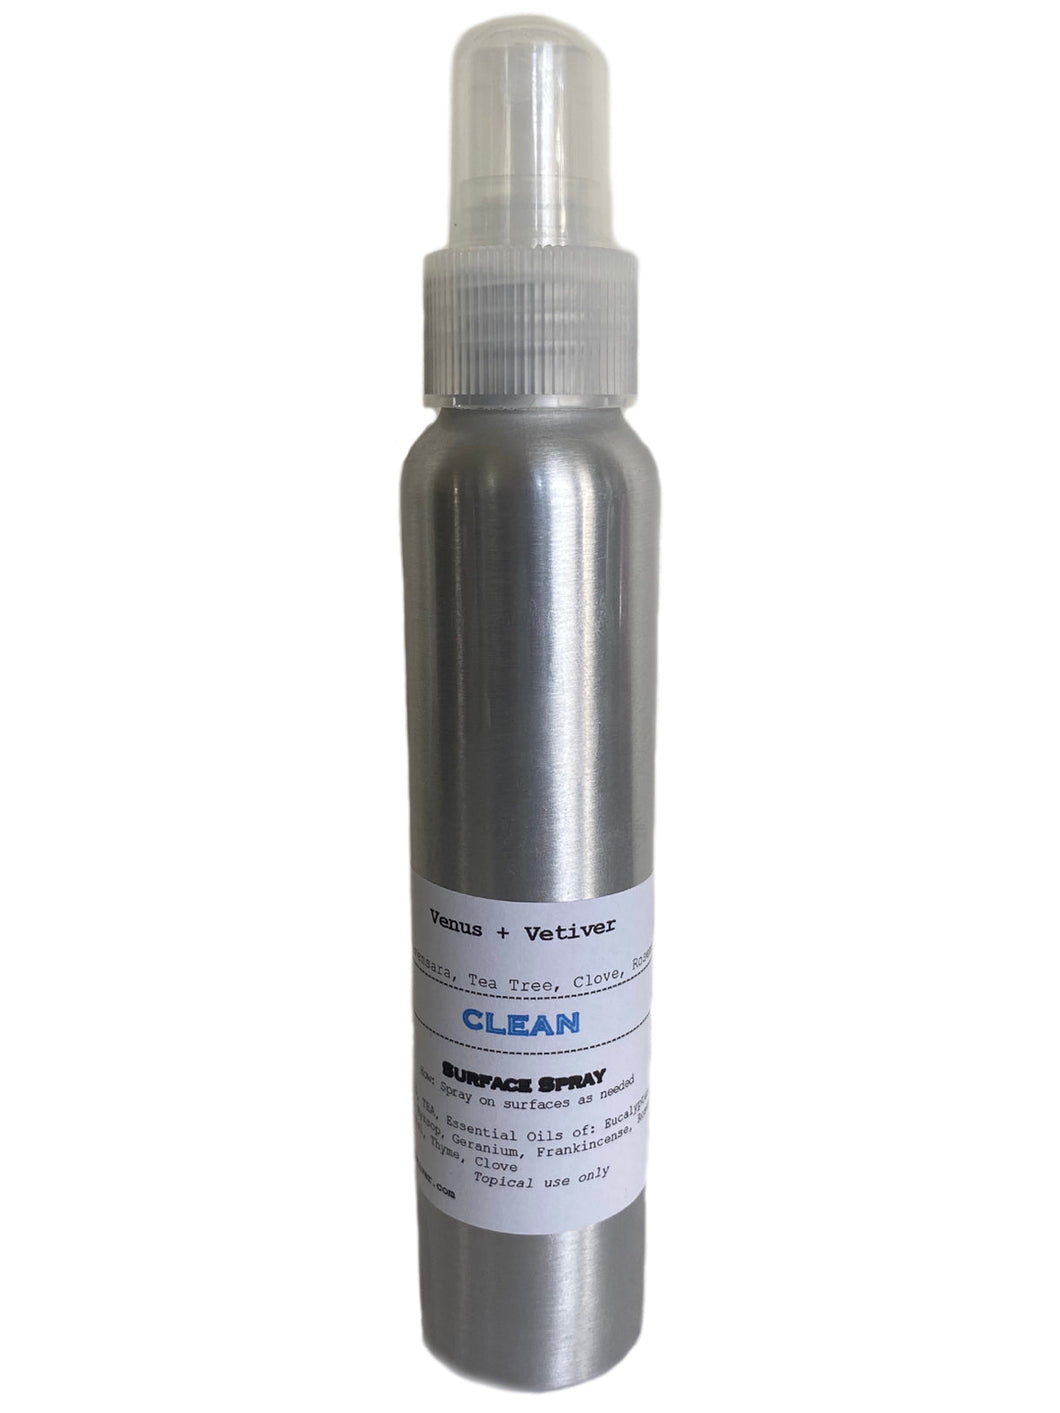 CLEAN Surface Spray